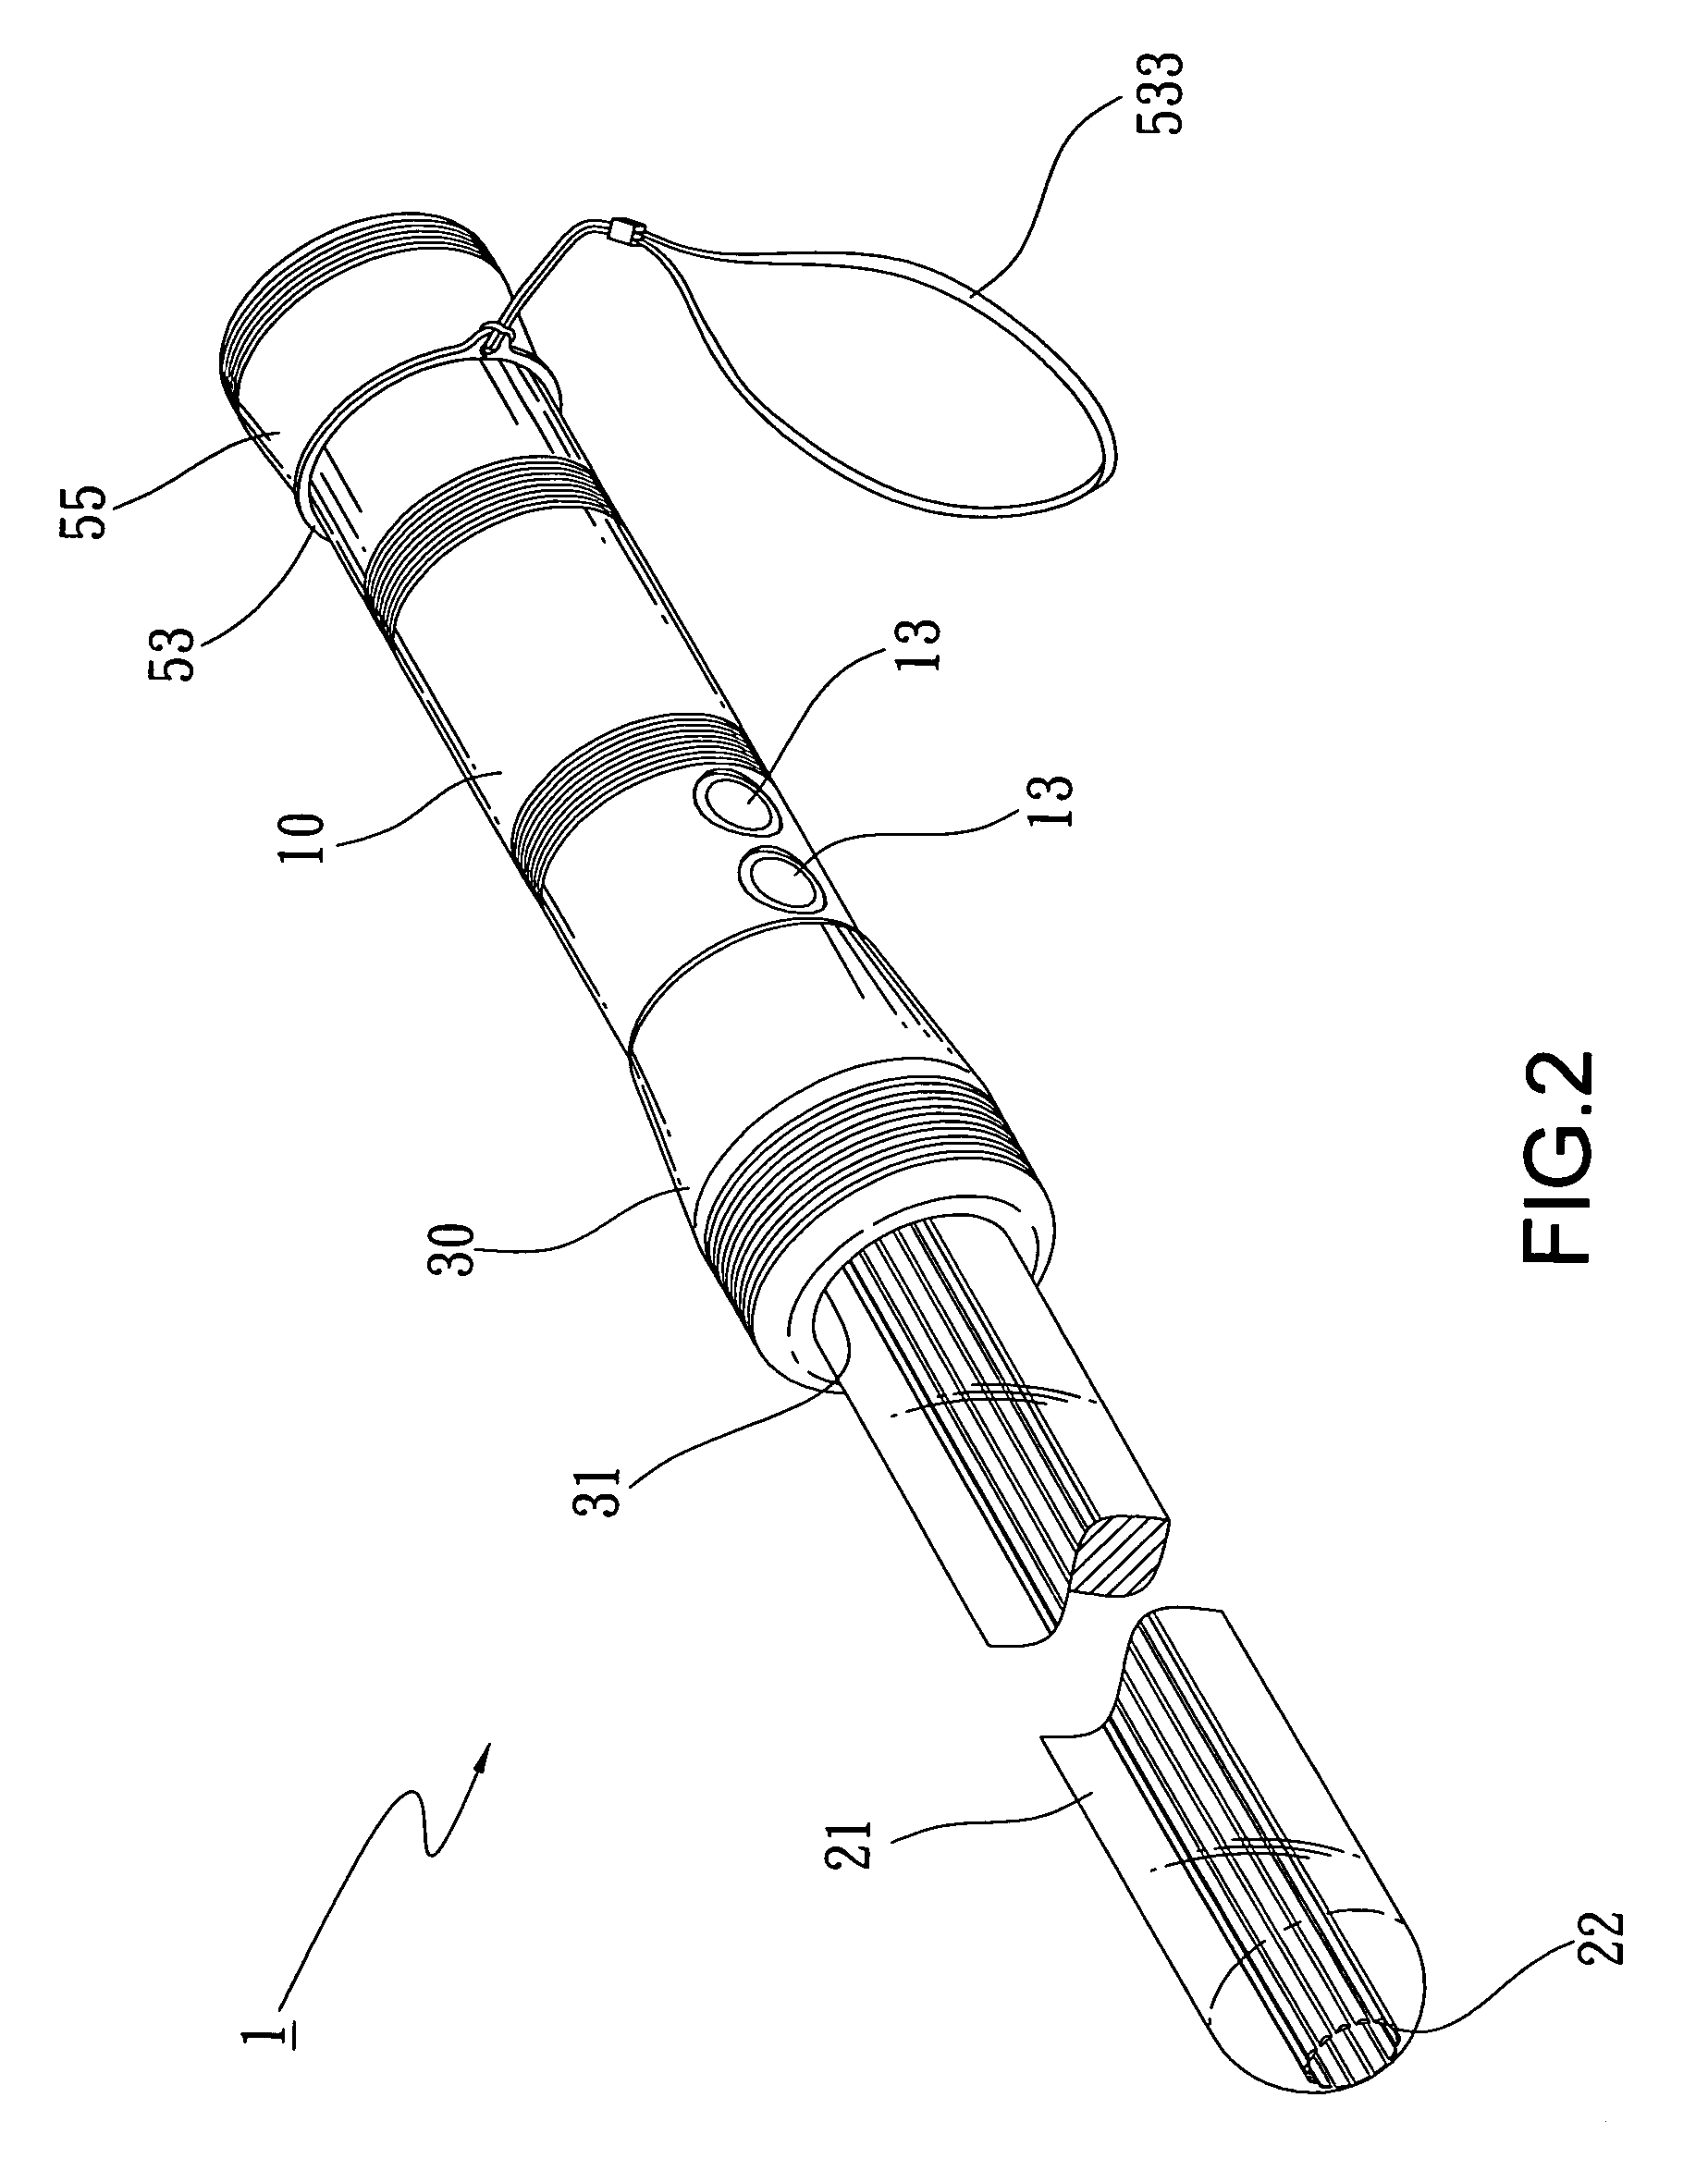 Illuminating caution light apparatus that combines a nightstick, a flashlight, and a baton